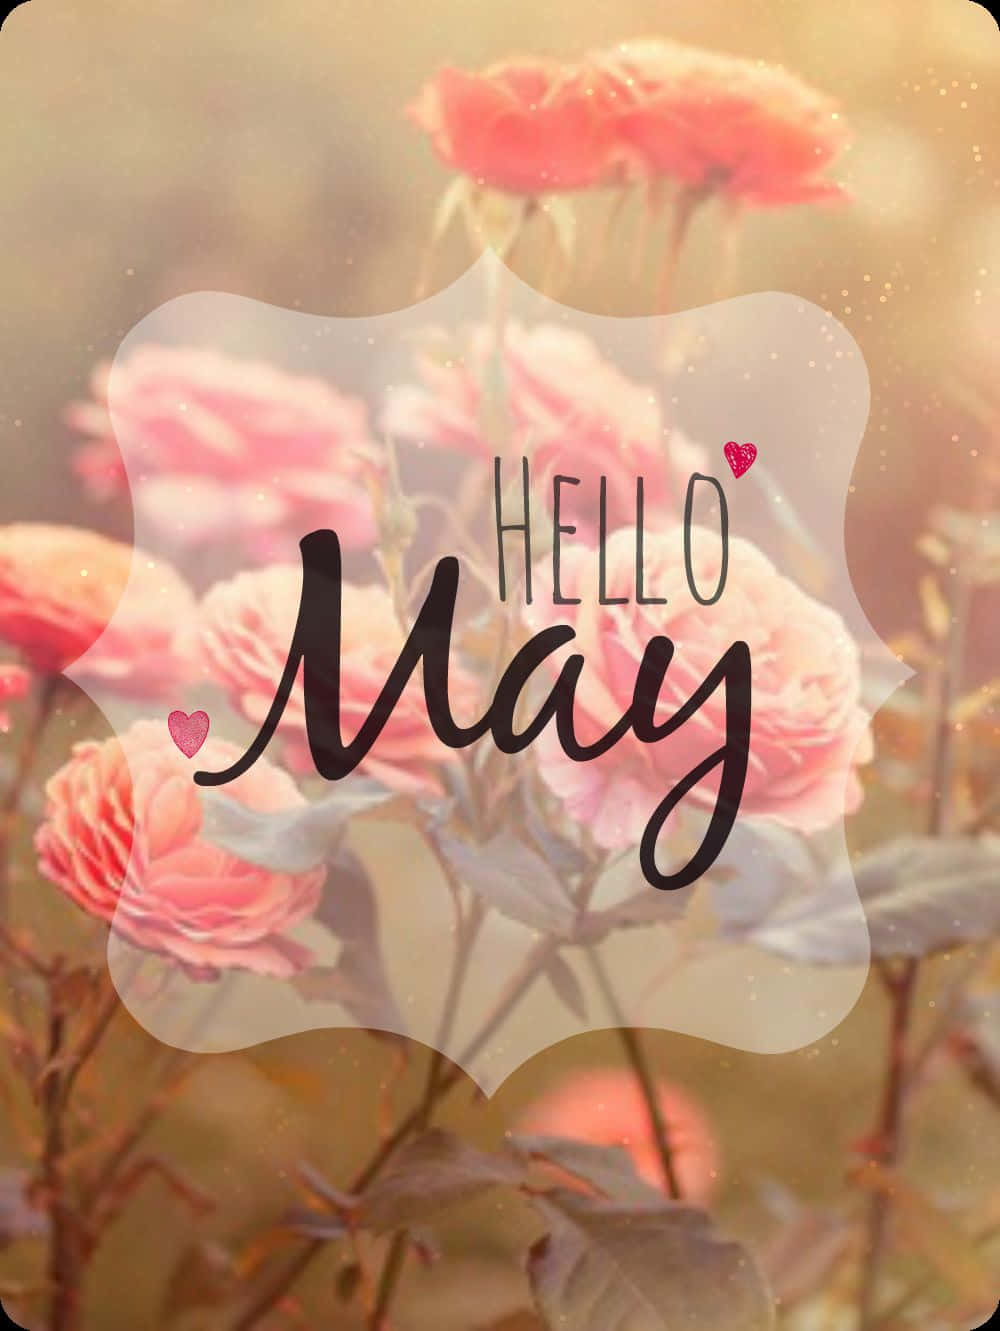 Enjoy the beauty of May